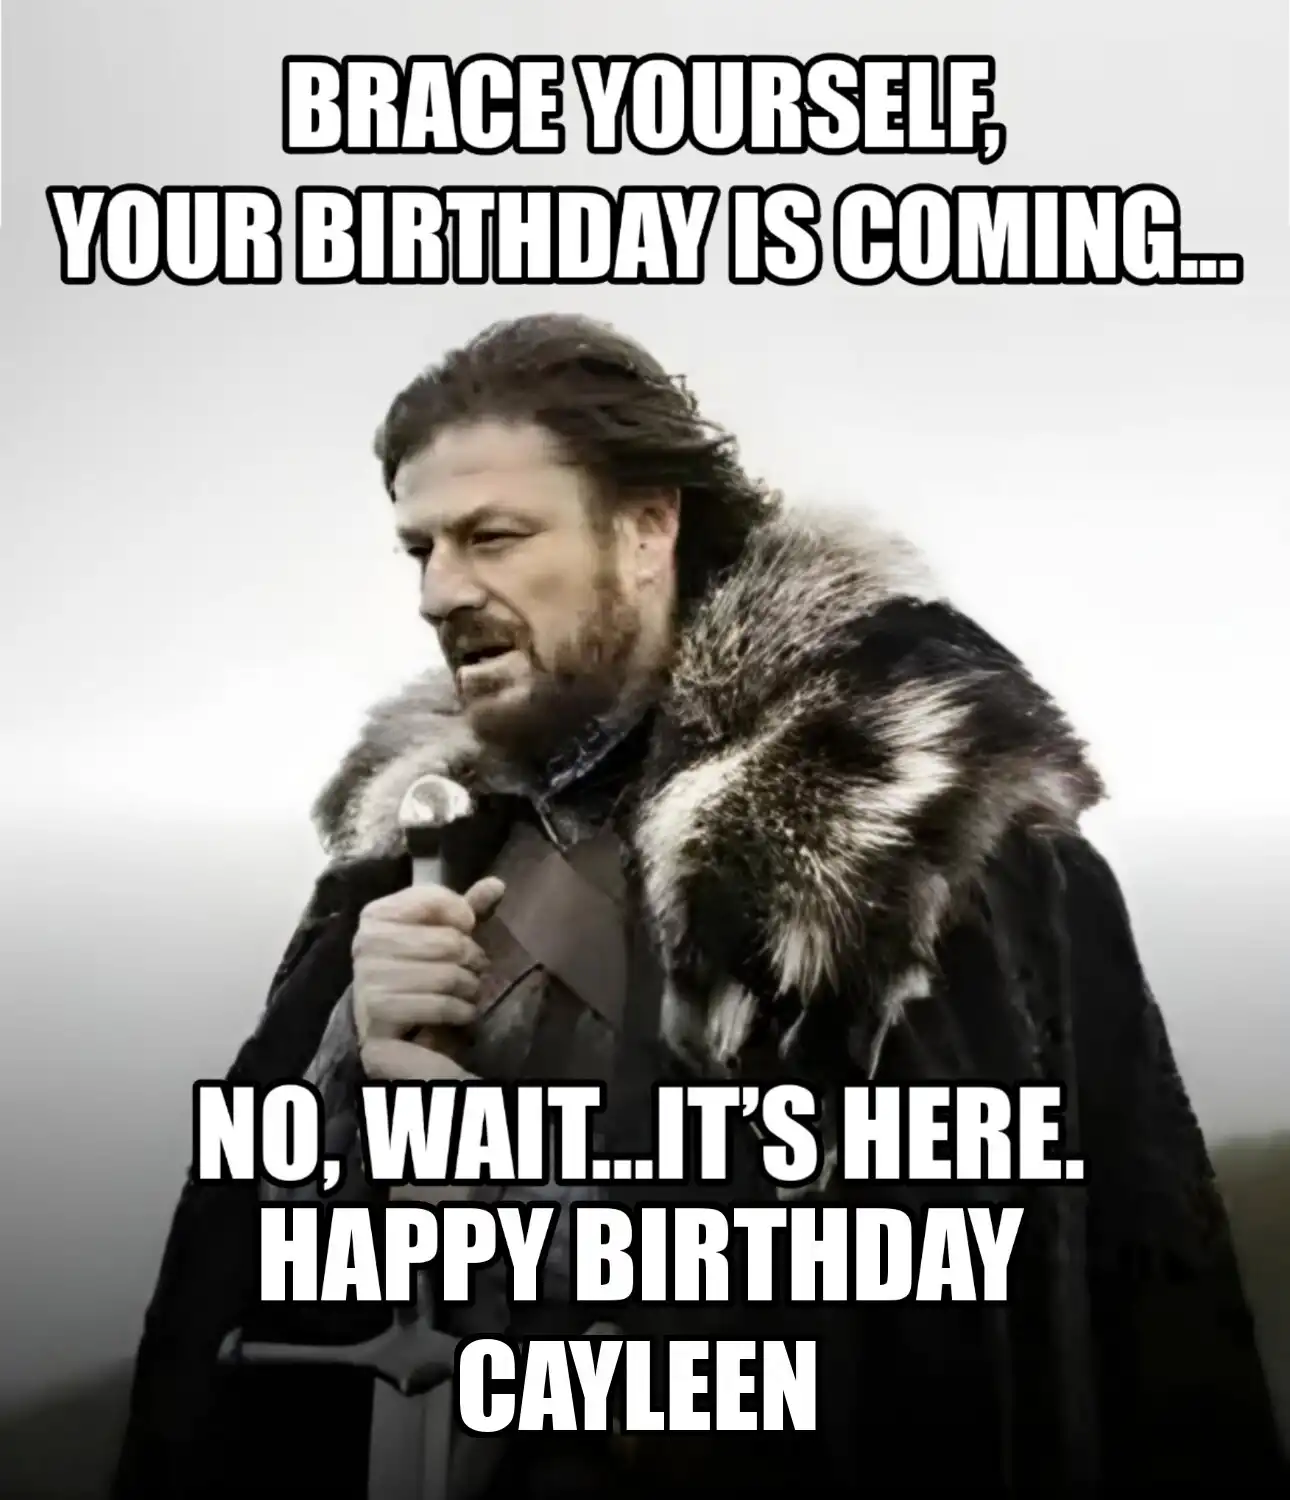 Happy Birthday Cayleen Brace Yourself Your Birthday Is Coming Meme